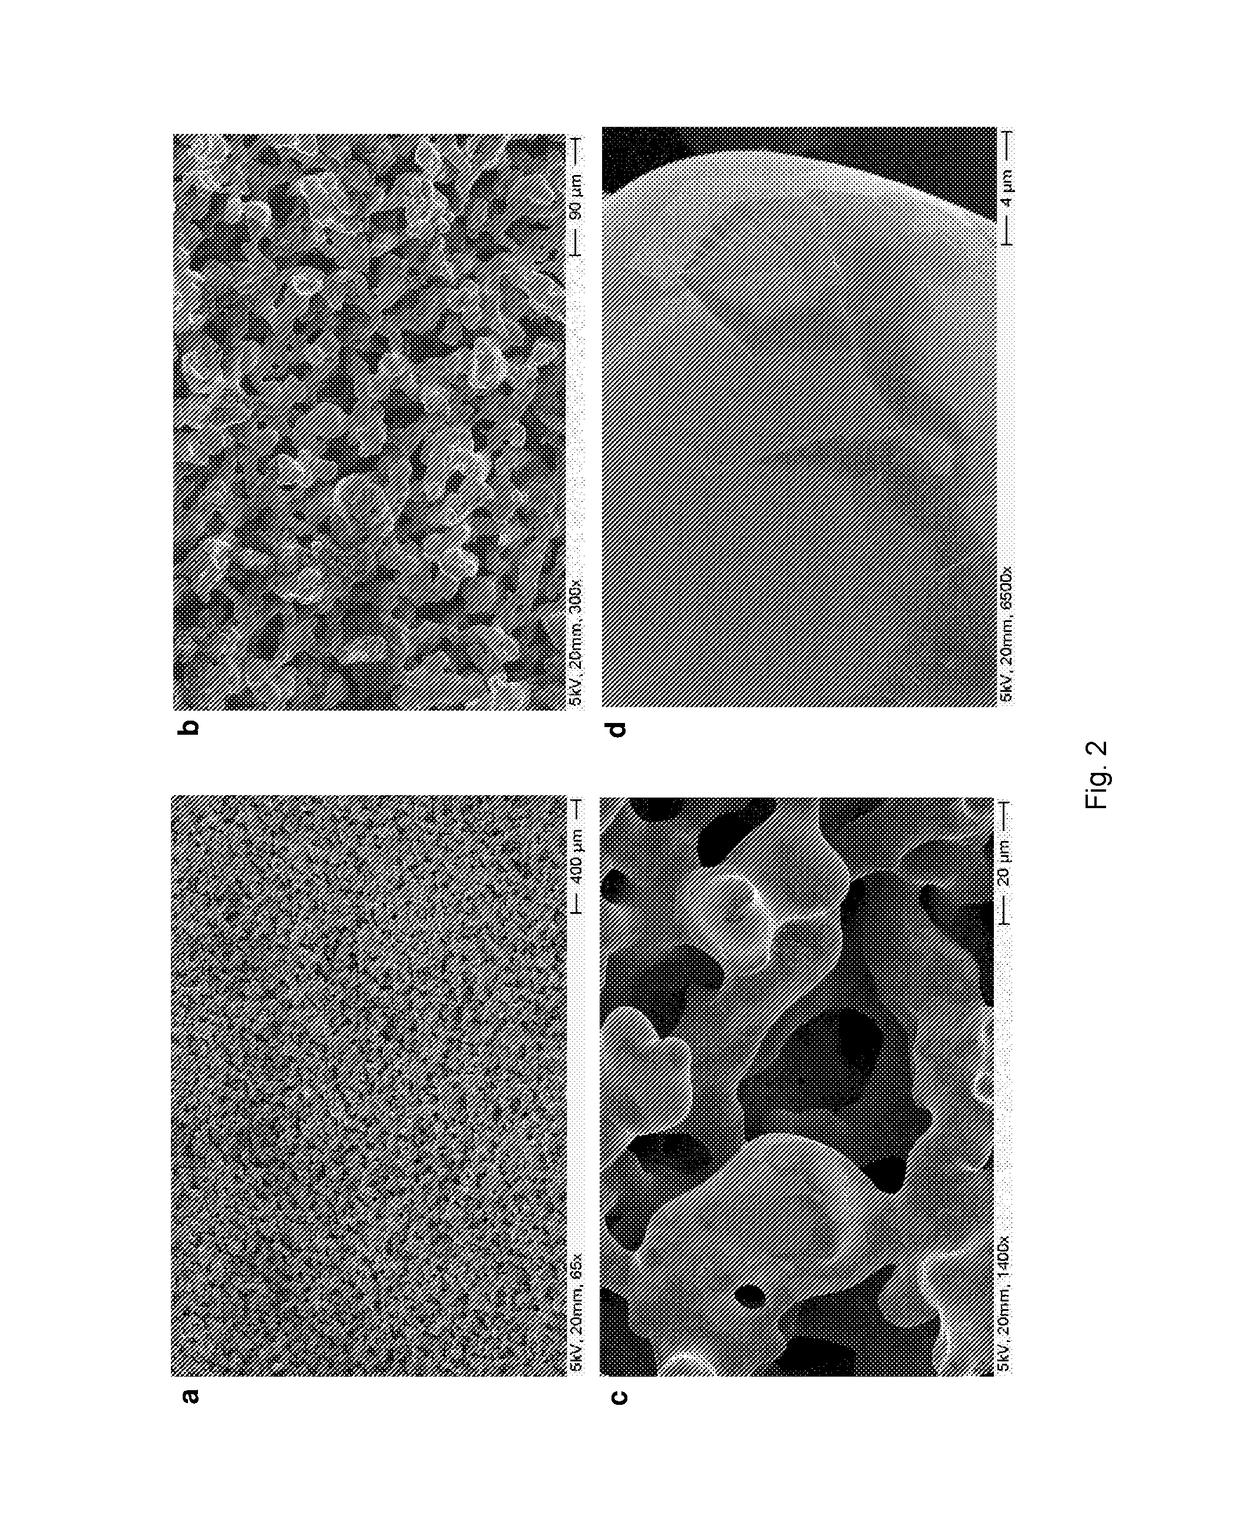 Porous materials comprising two-dimensional nanomaterials